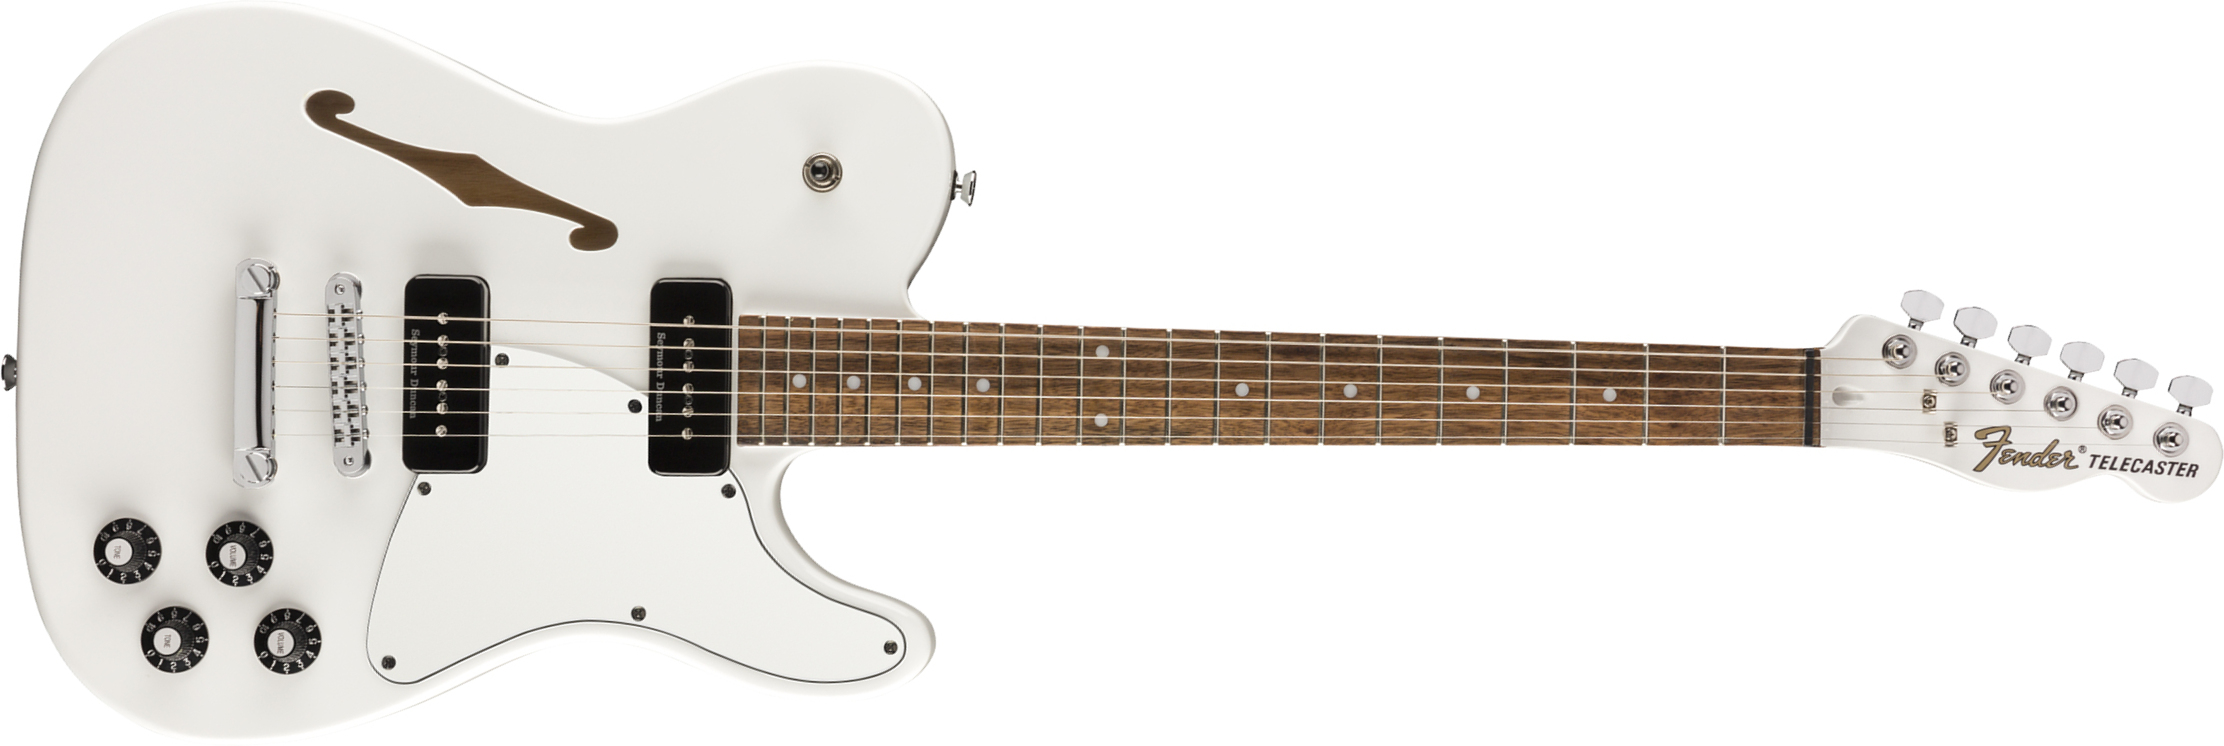 Fender Jim Adkins Tele Ja-90 Mex Signature 2p90 Lau - White - Guitarra eléctrica con forma de tel - Main picture